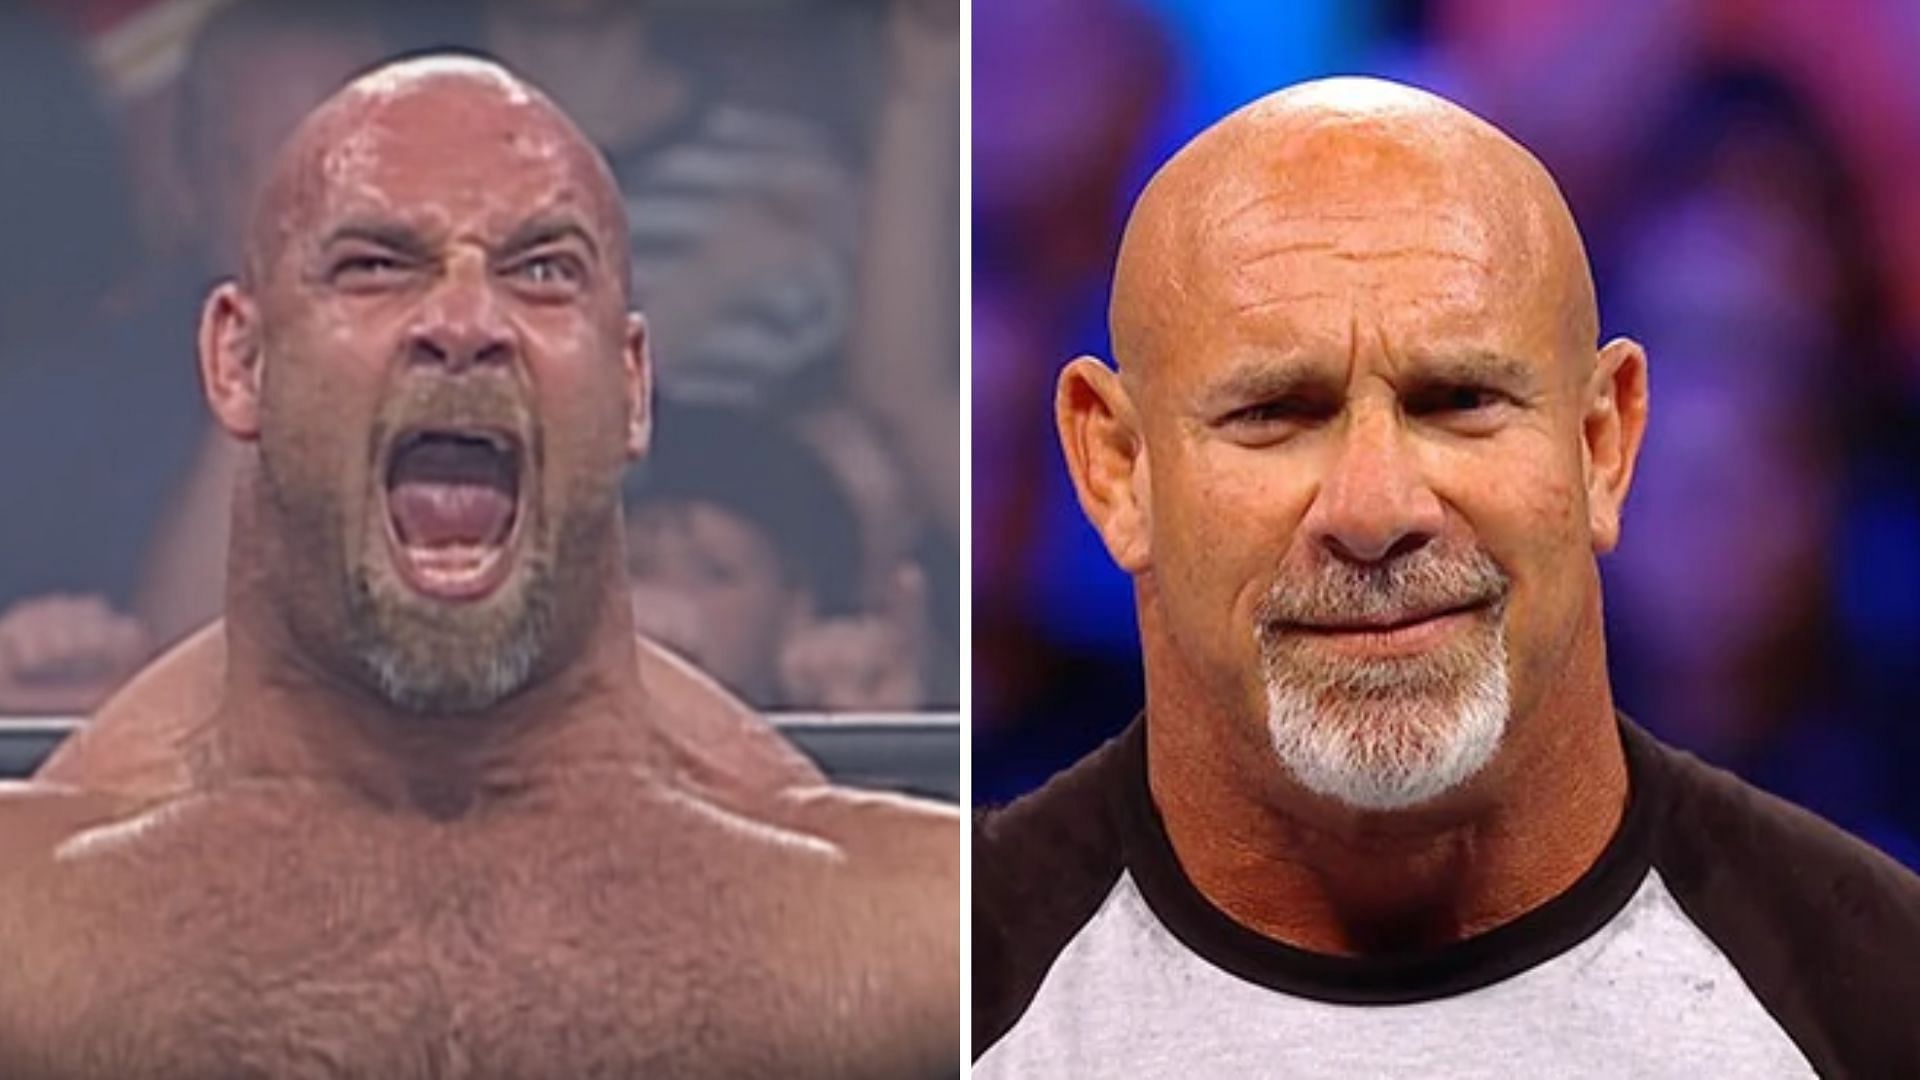 Goldberg is a 2-time Universal Championn!